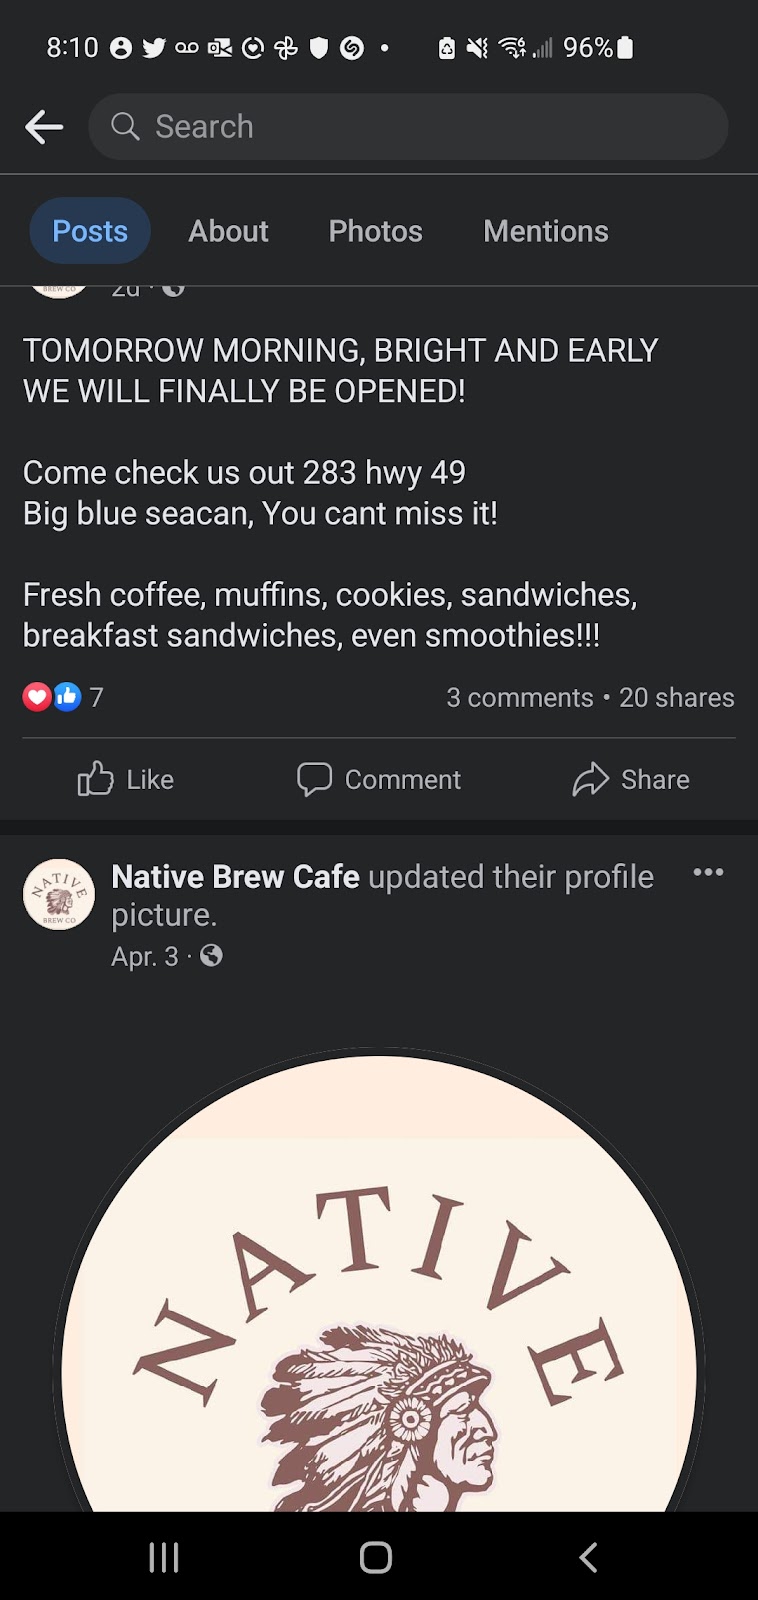 Native Brew Cafe | 283 ON-49, Deseronto, ON K0K 1X0, Canada | Phone: (613) 970-2224